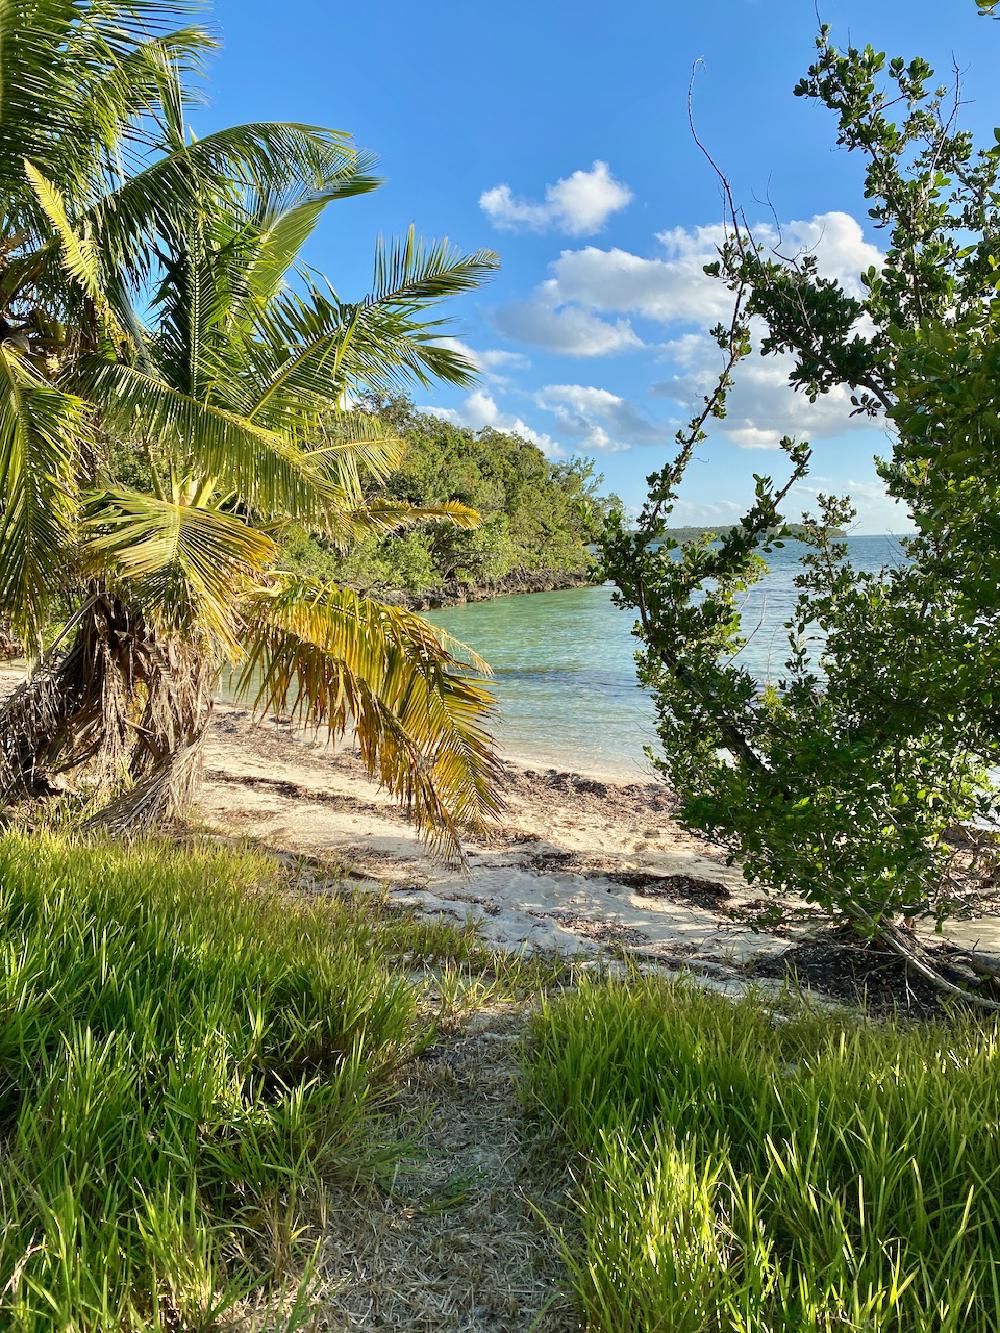 Nunjack Cay, Abaco Islands, Bahamas